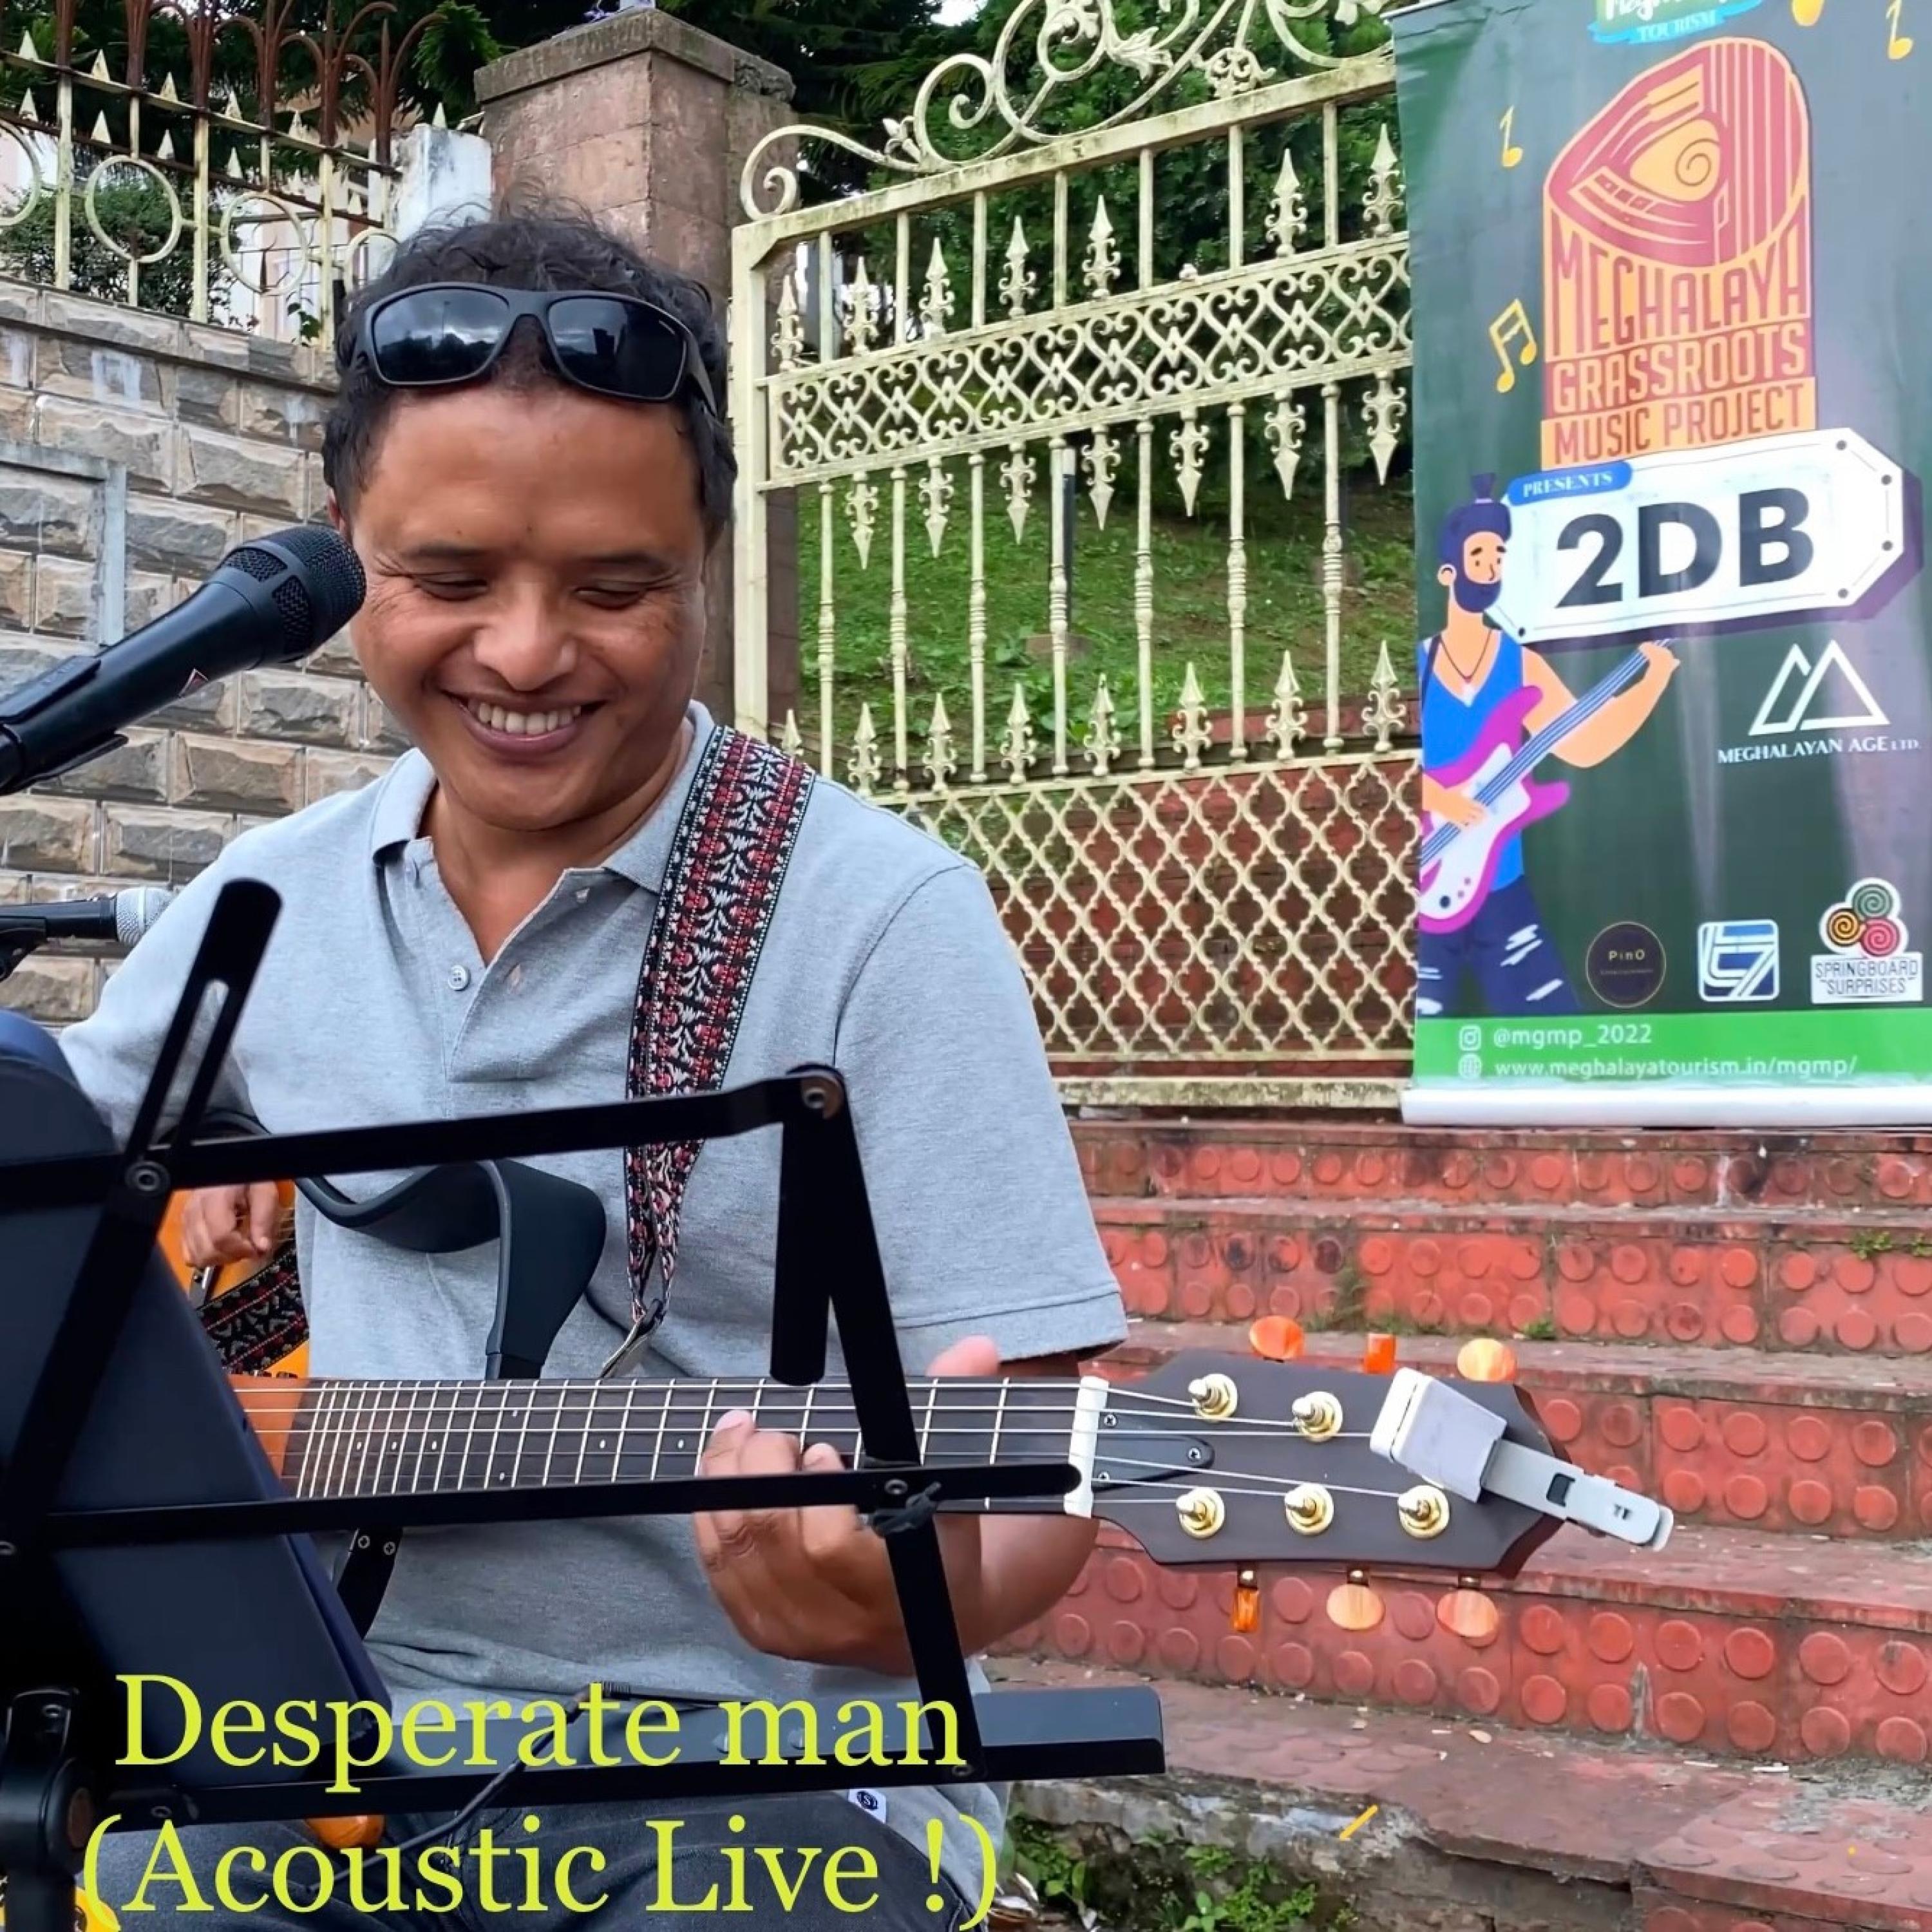 2DB - Desperate man (Acoustic Live !)